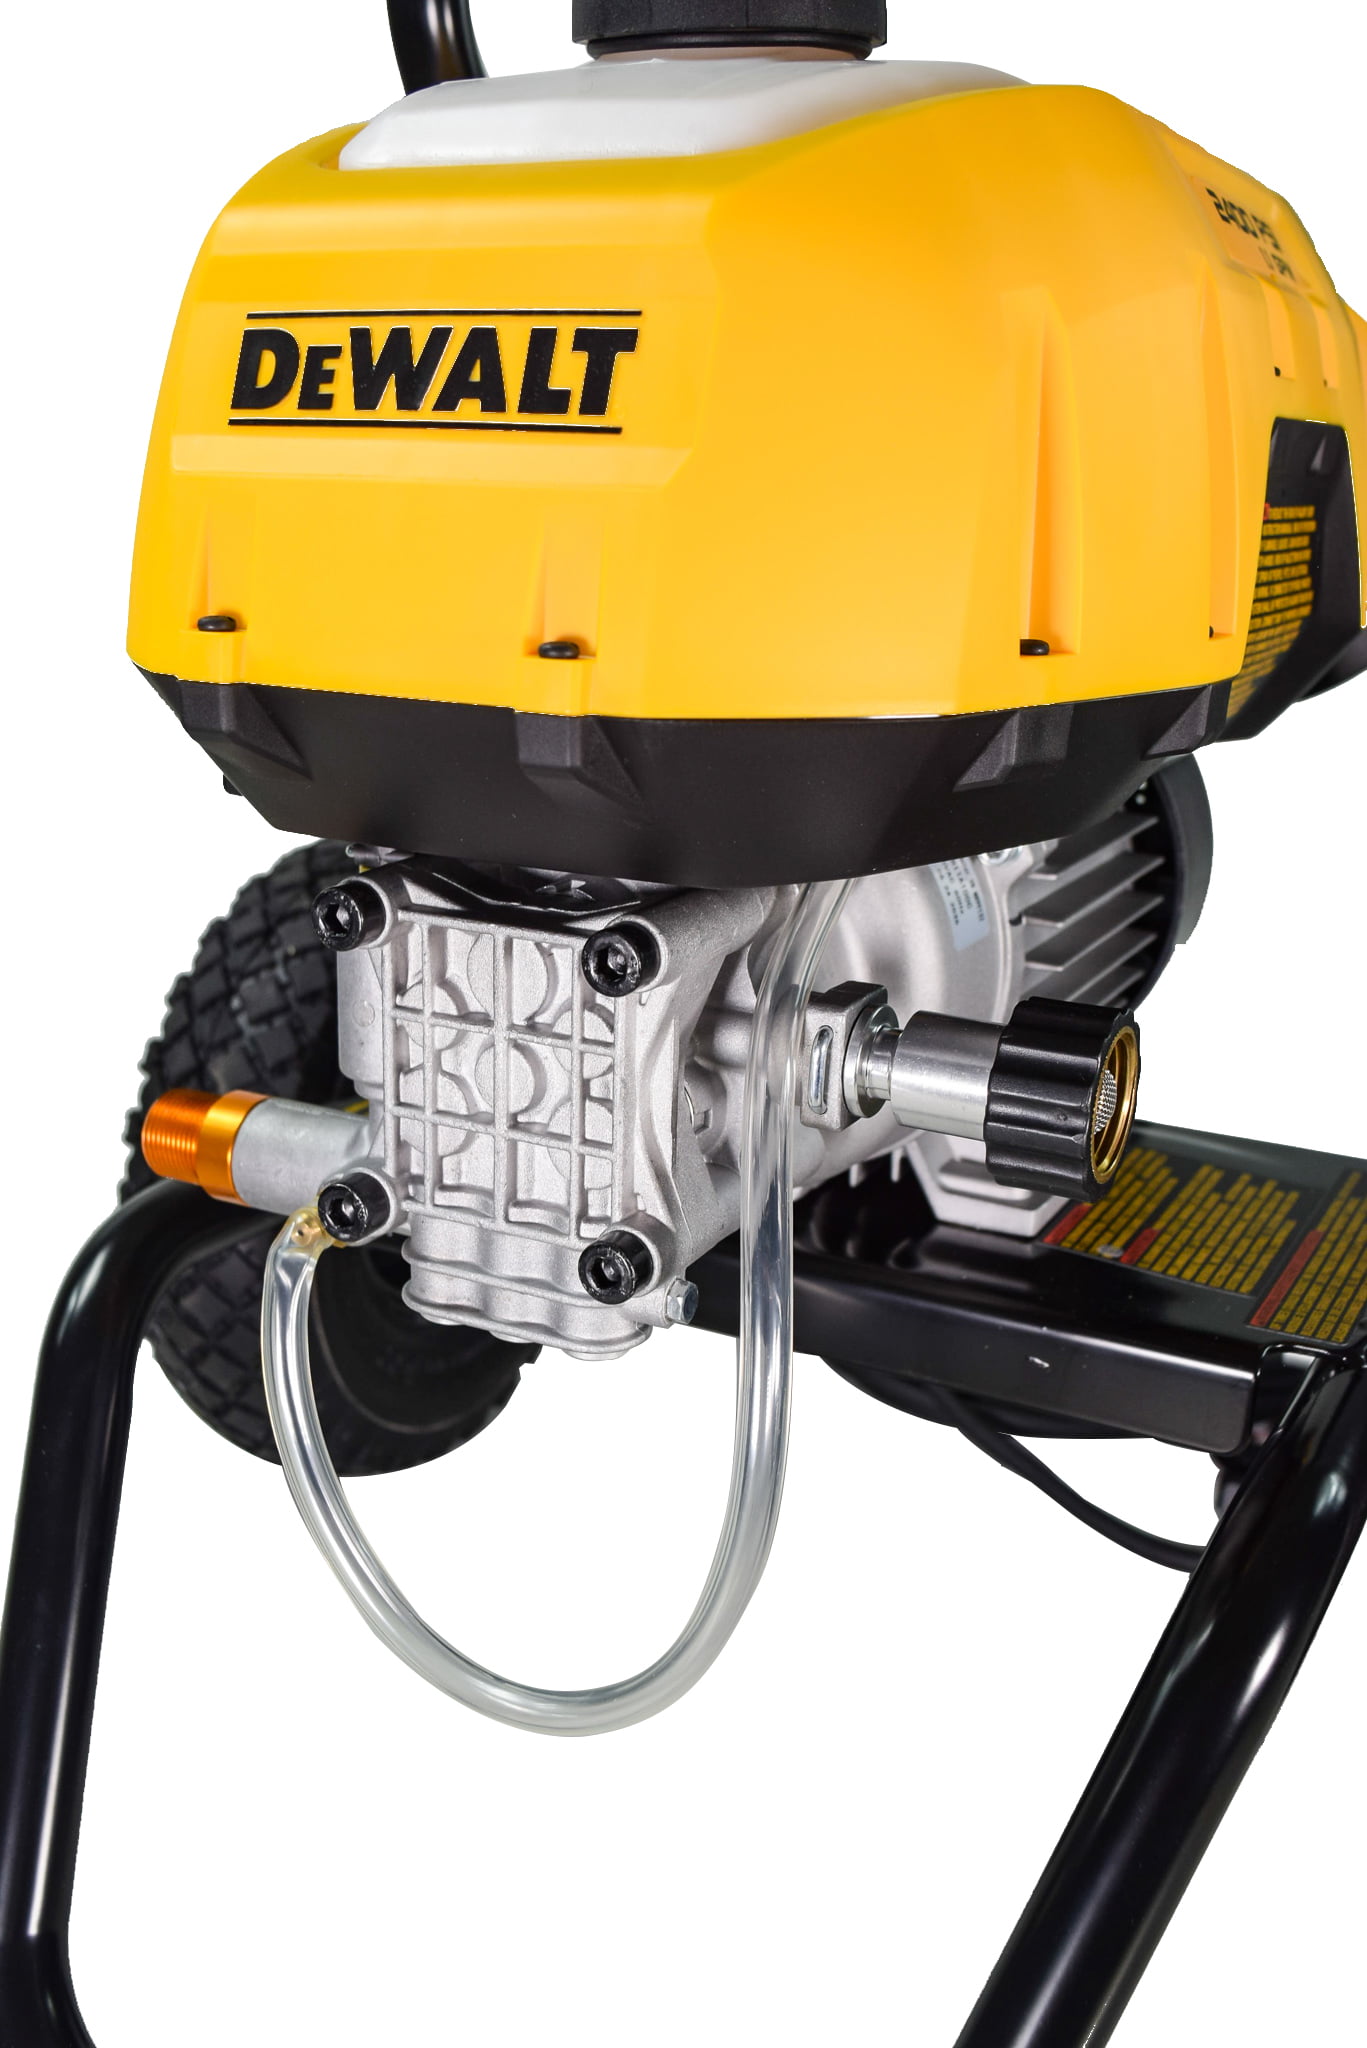 DeWalt DWPW2400 Pressure Washer Review - Consumer Reports